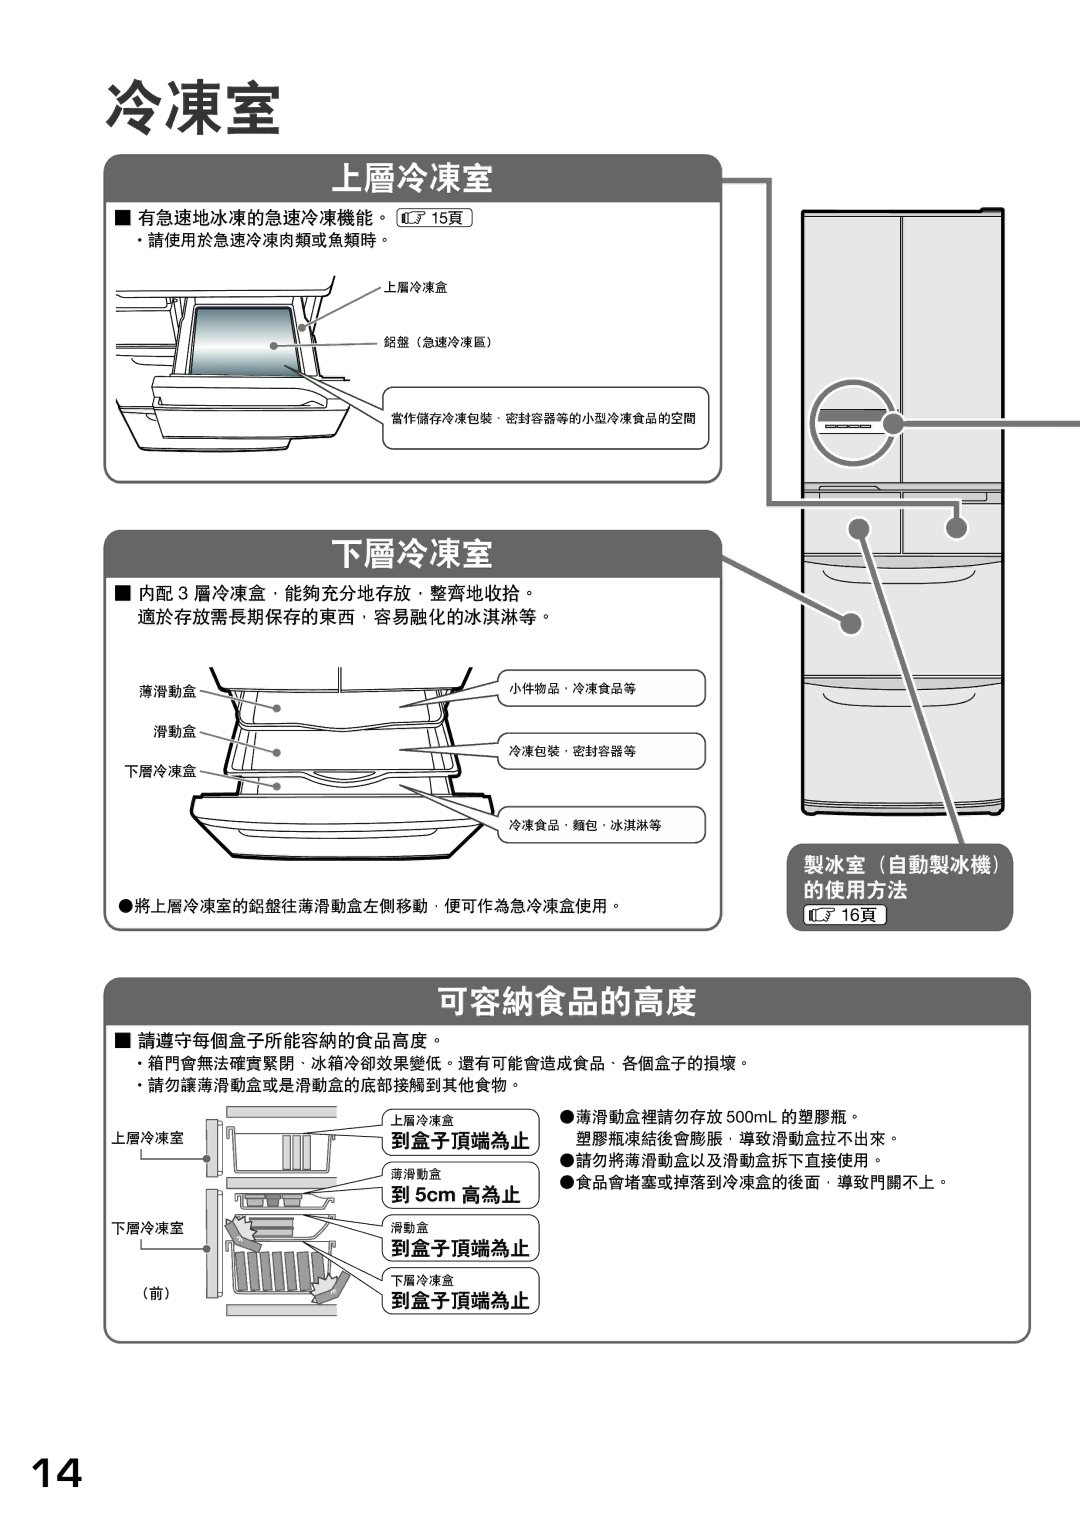 Hitachi r-sf42bms operation manual 上層冷凍室, 下層冷凍室, 可容納食品的高度 